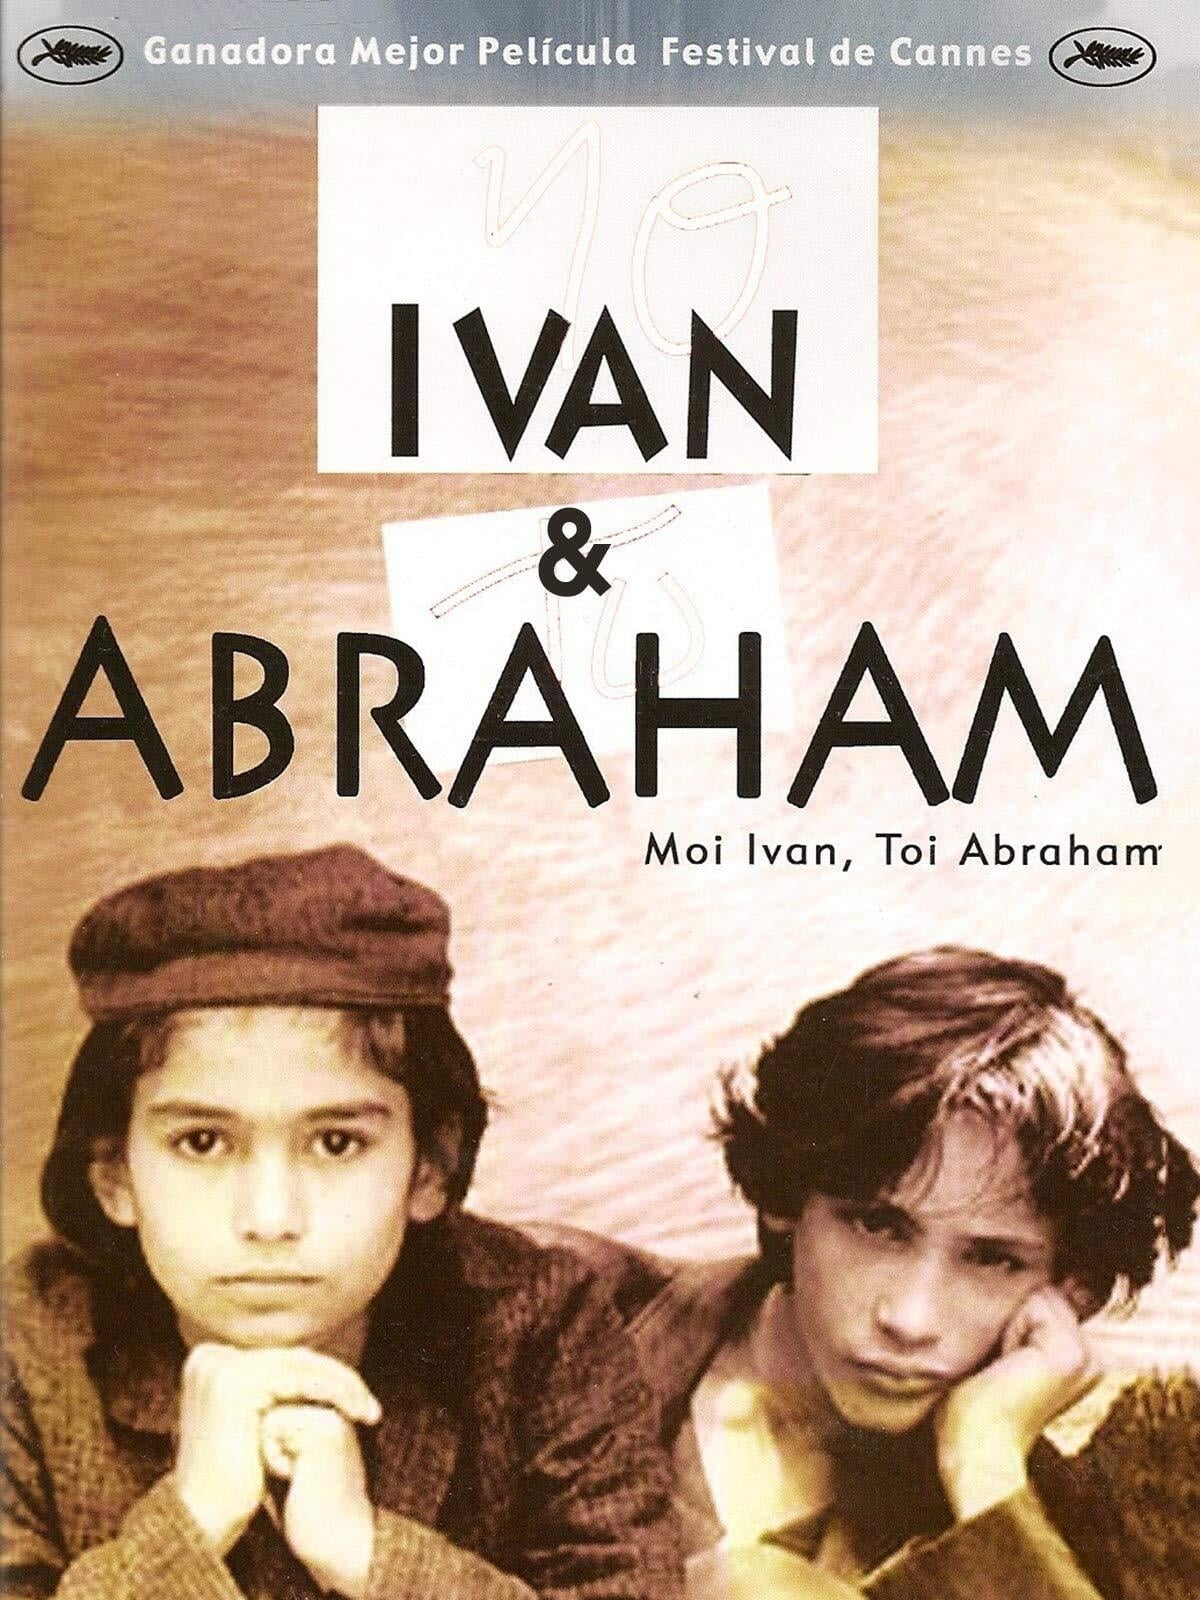 Ivan & Abraham (1993)